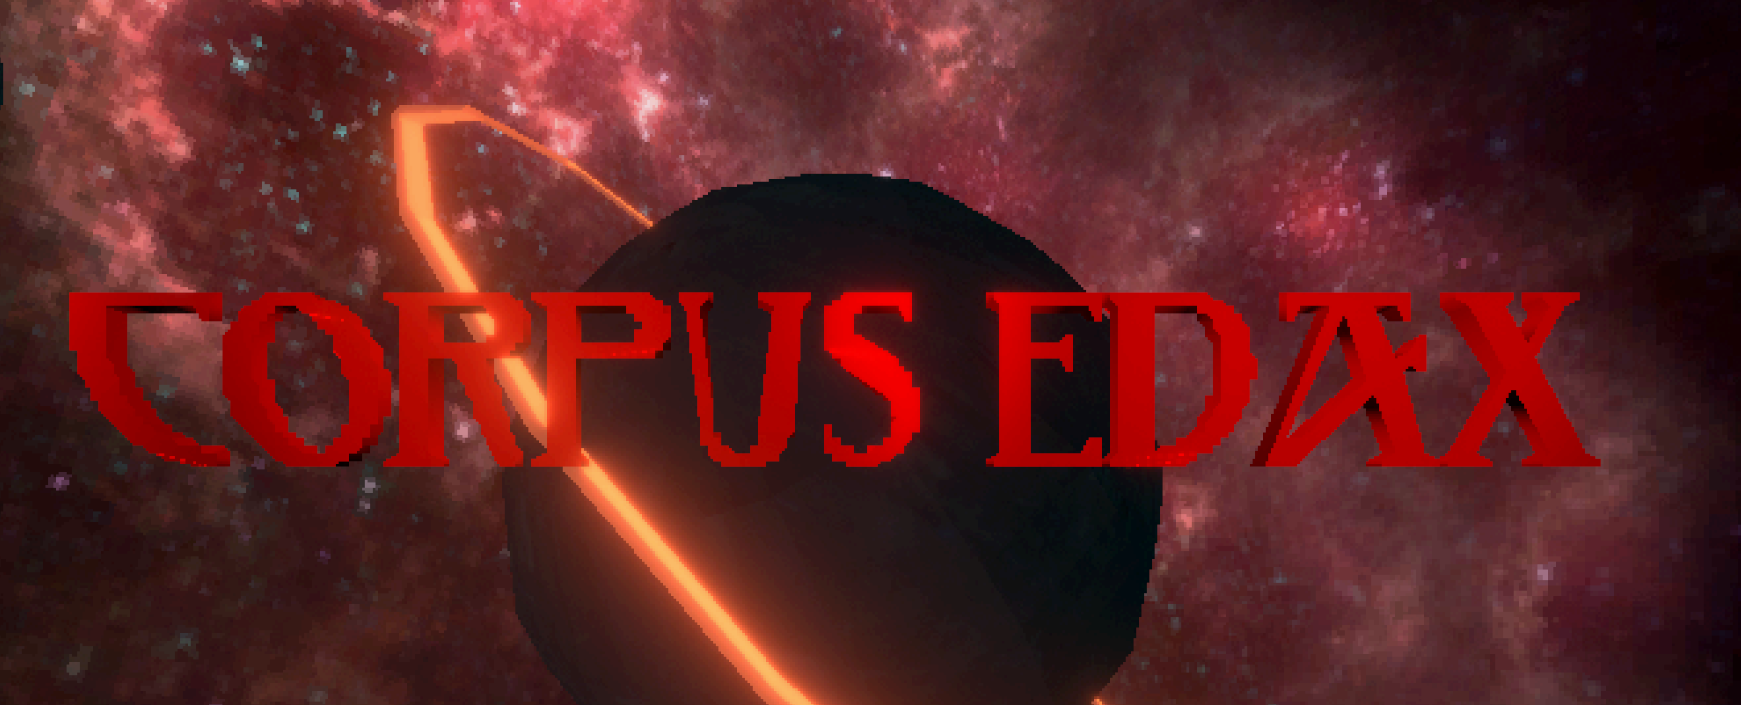 Corpus Edax - HPS1 Jam